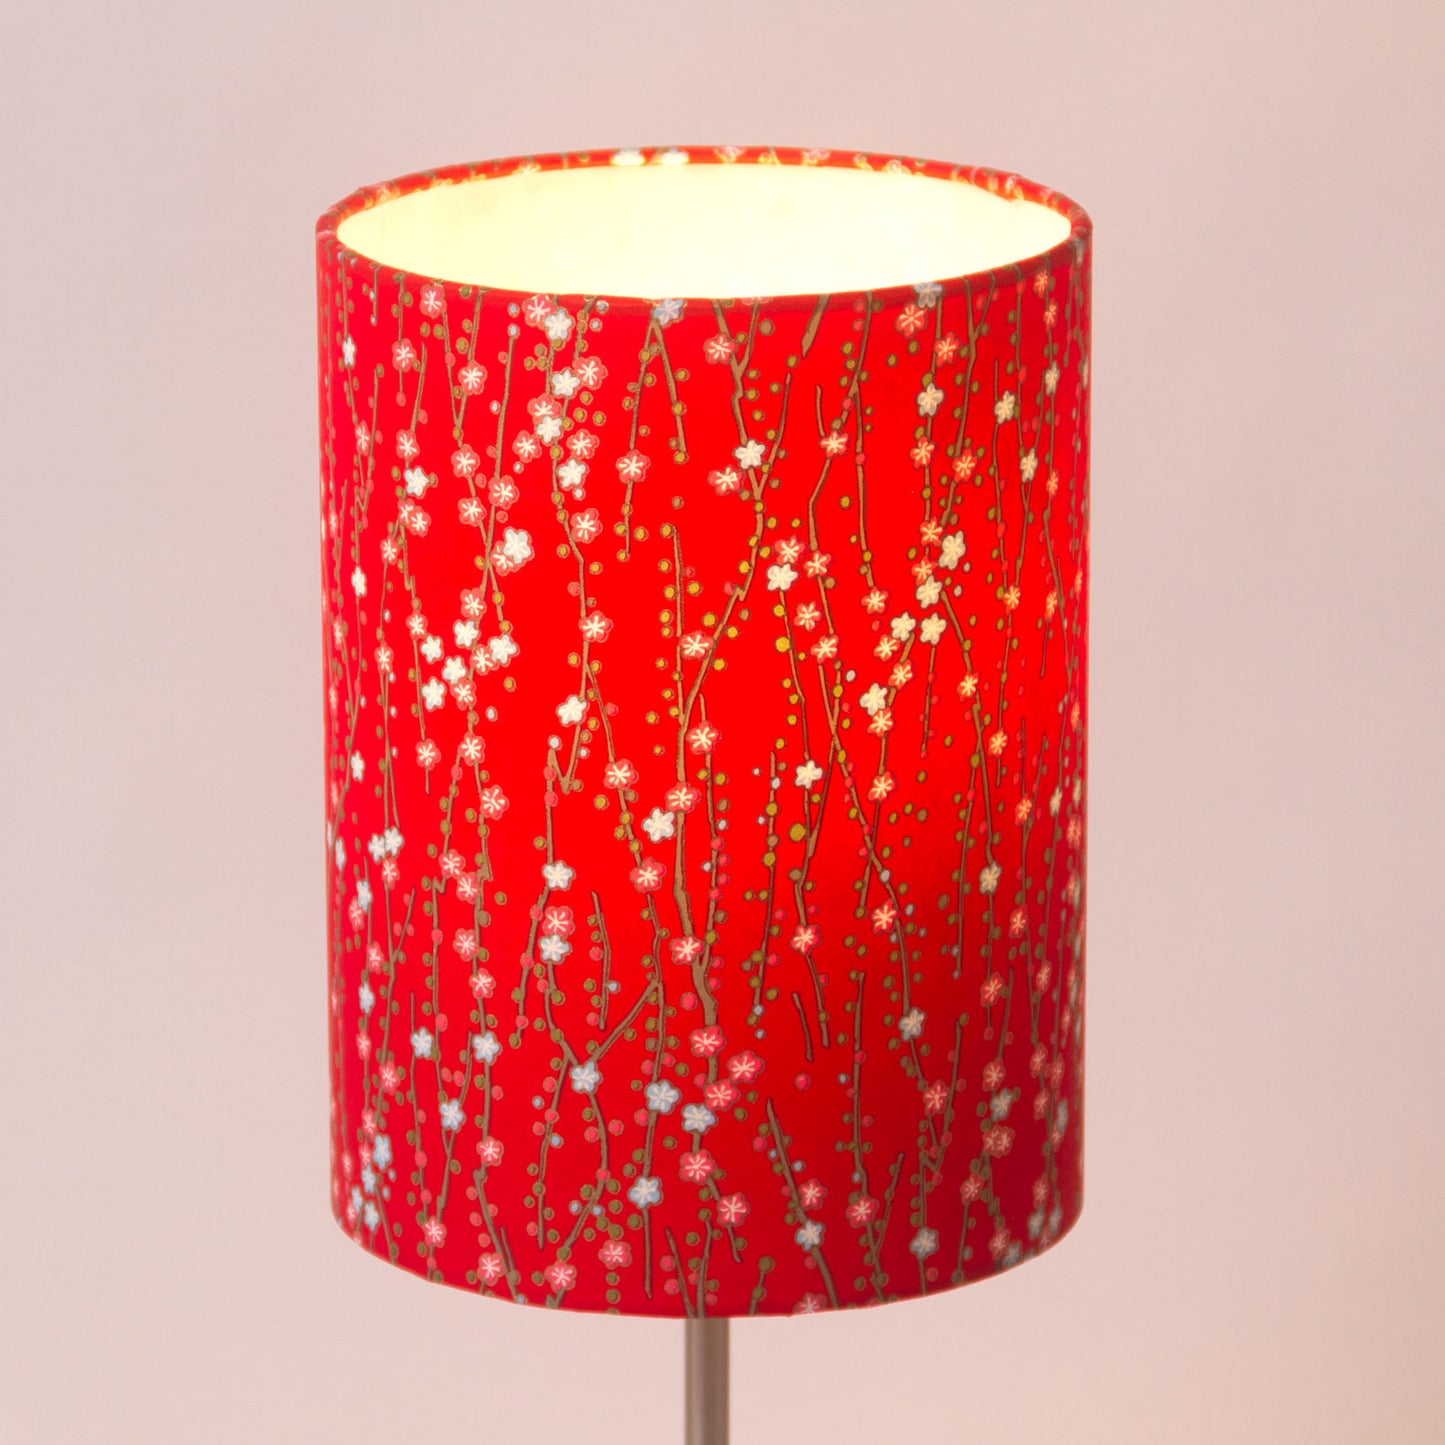 Drum Lamp Shade - W01 - Red Daisies, 50cm(d) x 25cm(h)